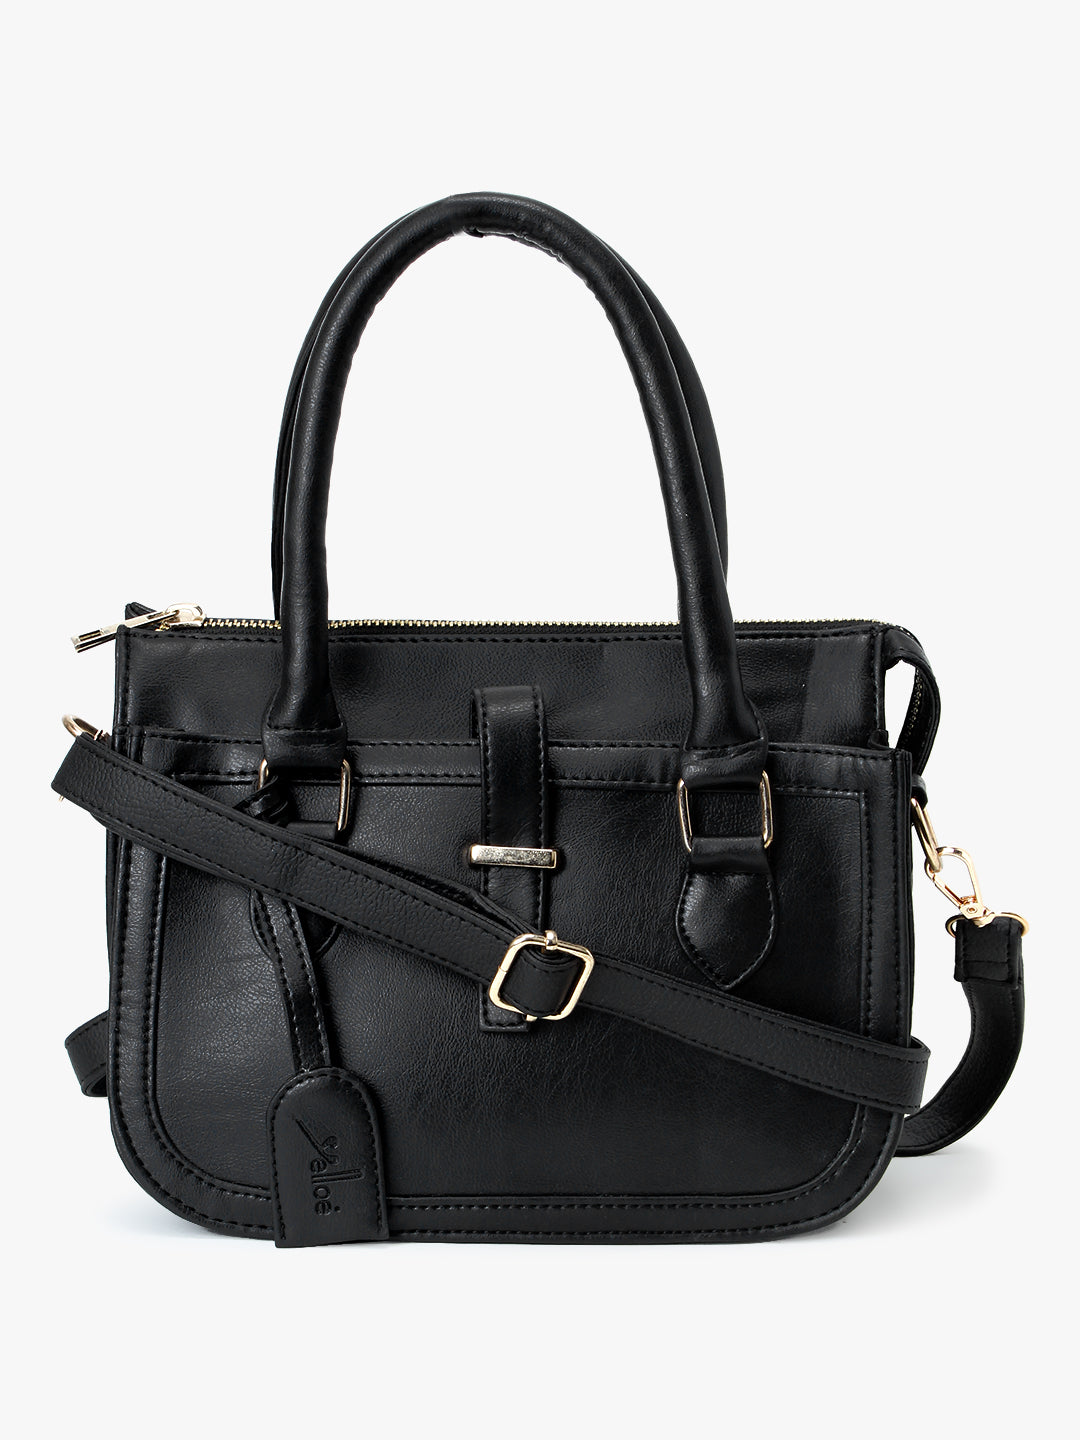 Black Satchel Handbag